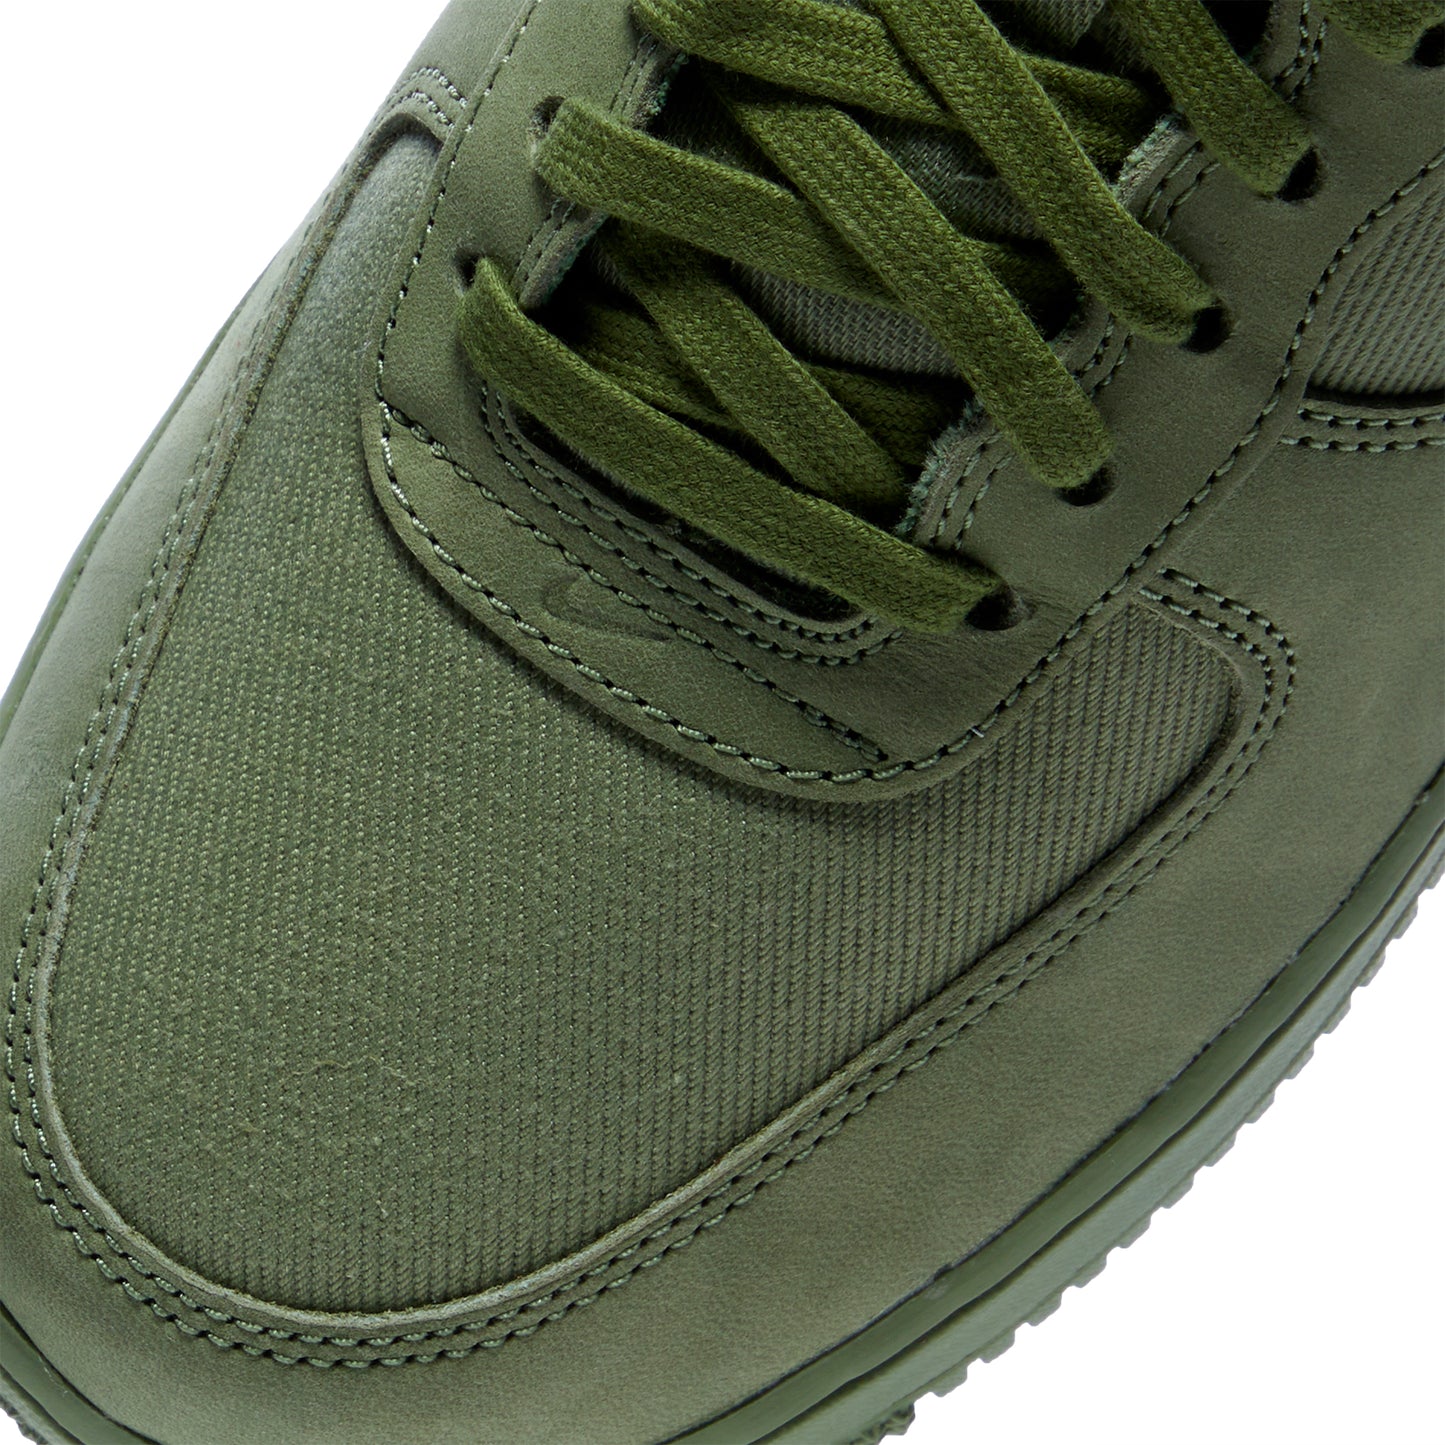 Nike Air Force 1 '07 LX (Oil Green/Cargo Khaki)